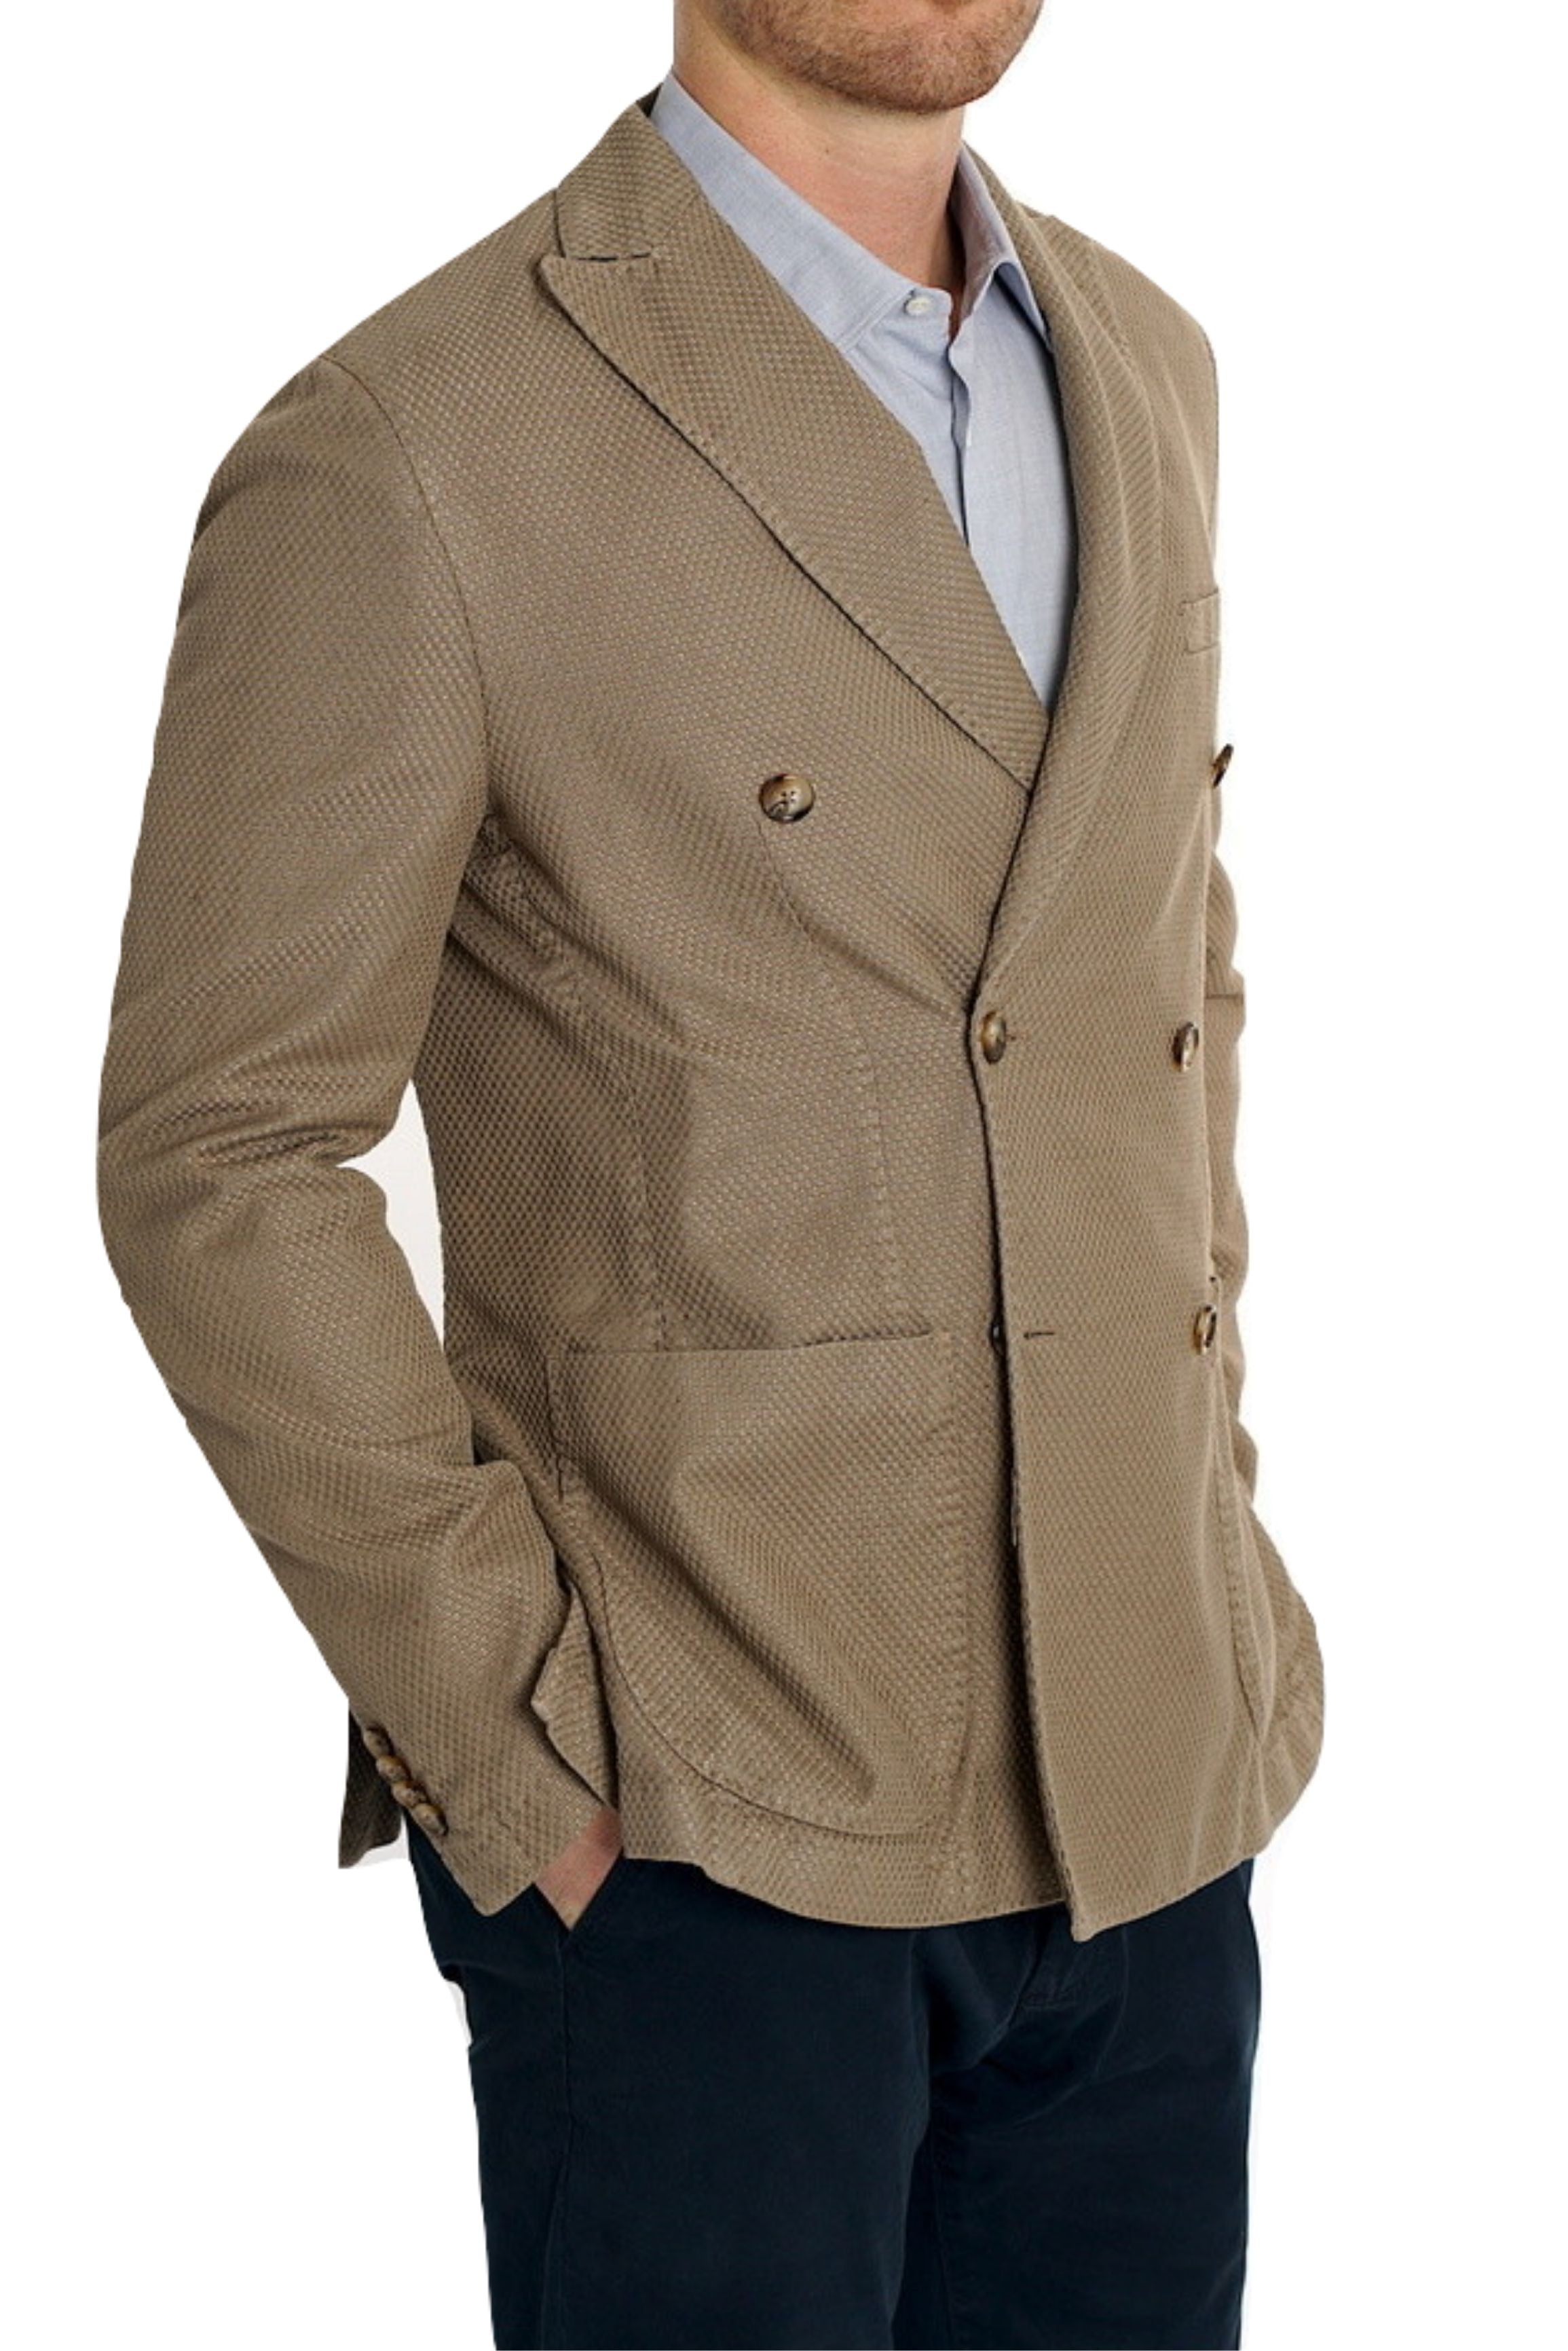 Paul Zileri Beige Retro Jacket - Mastroianni Fashions